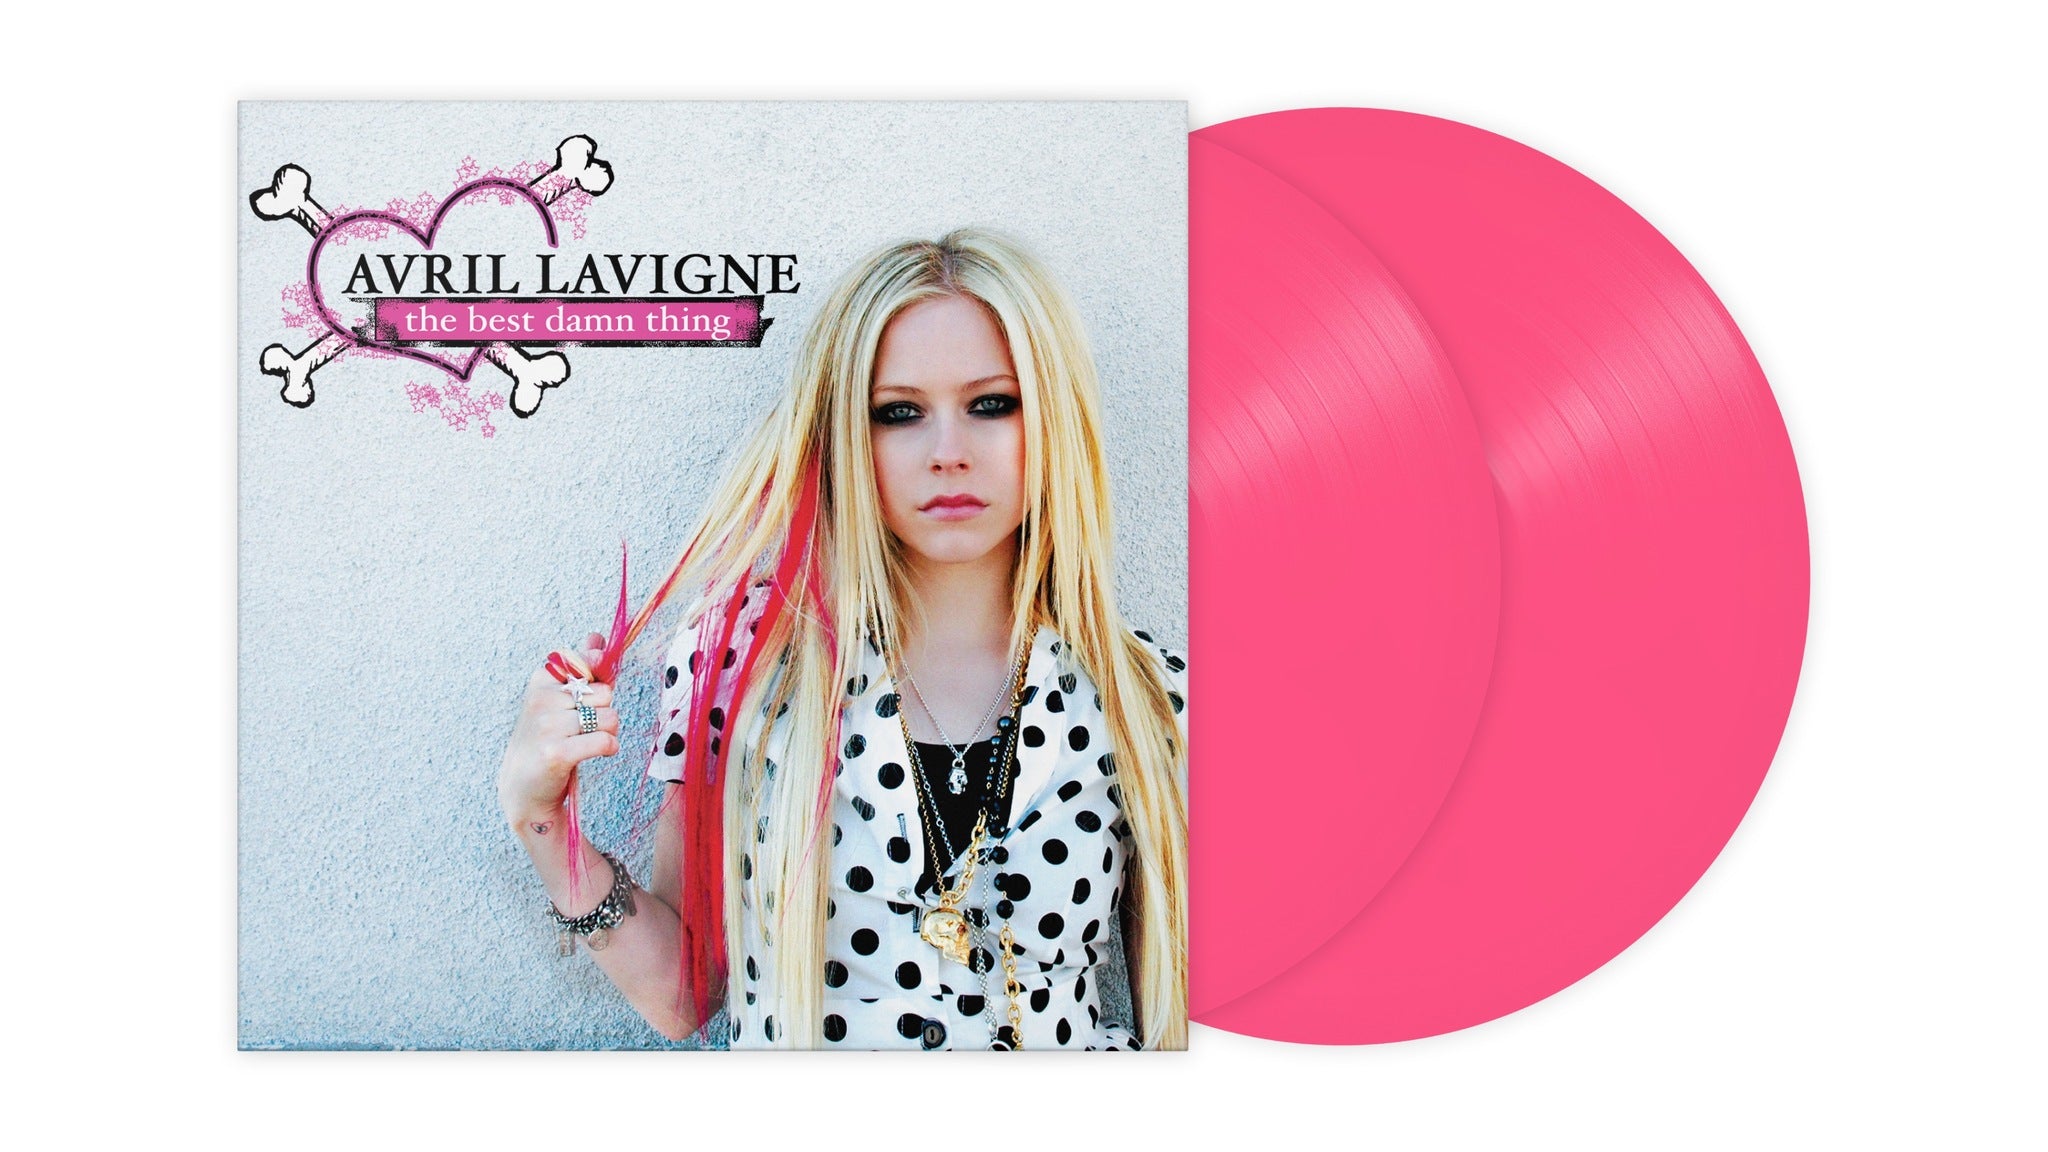 AVRIL LAVIGNE - The Best Damn Thing - 2LP - Bright Pink Vinyl [JUN 21]